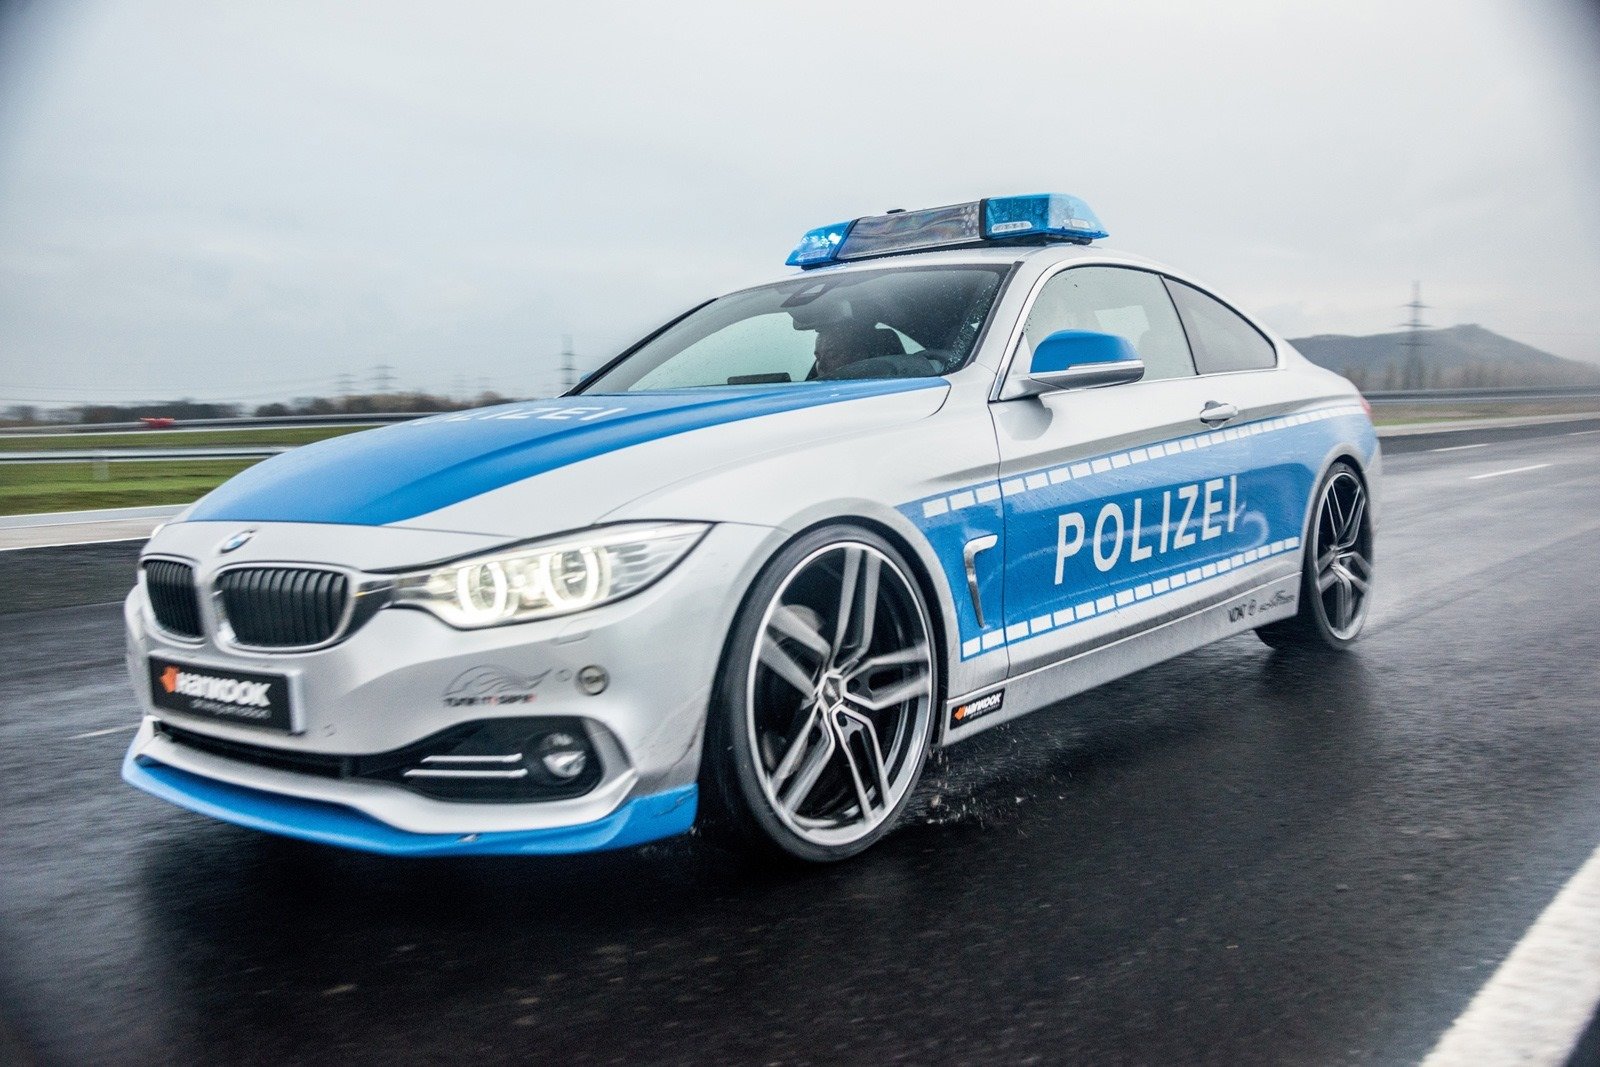 AC Schnitzer Tuned BMW 428i in Politieauto